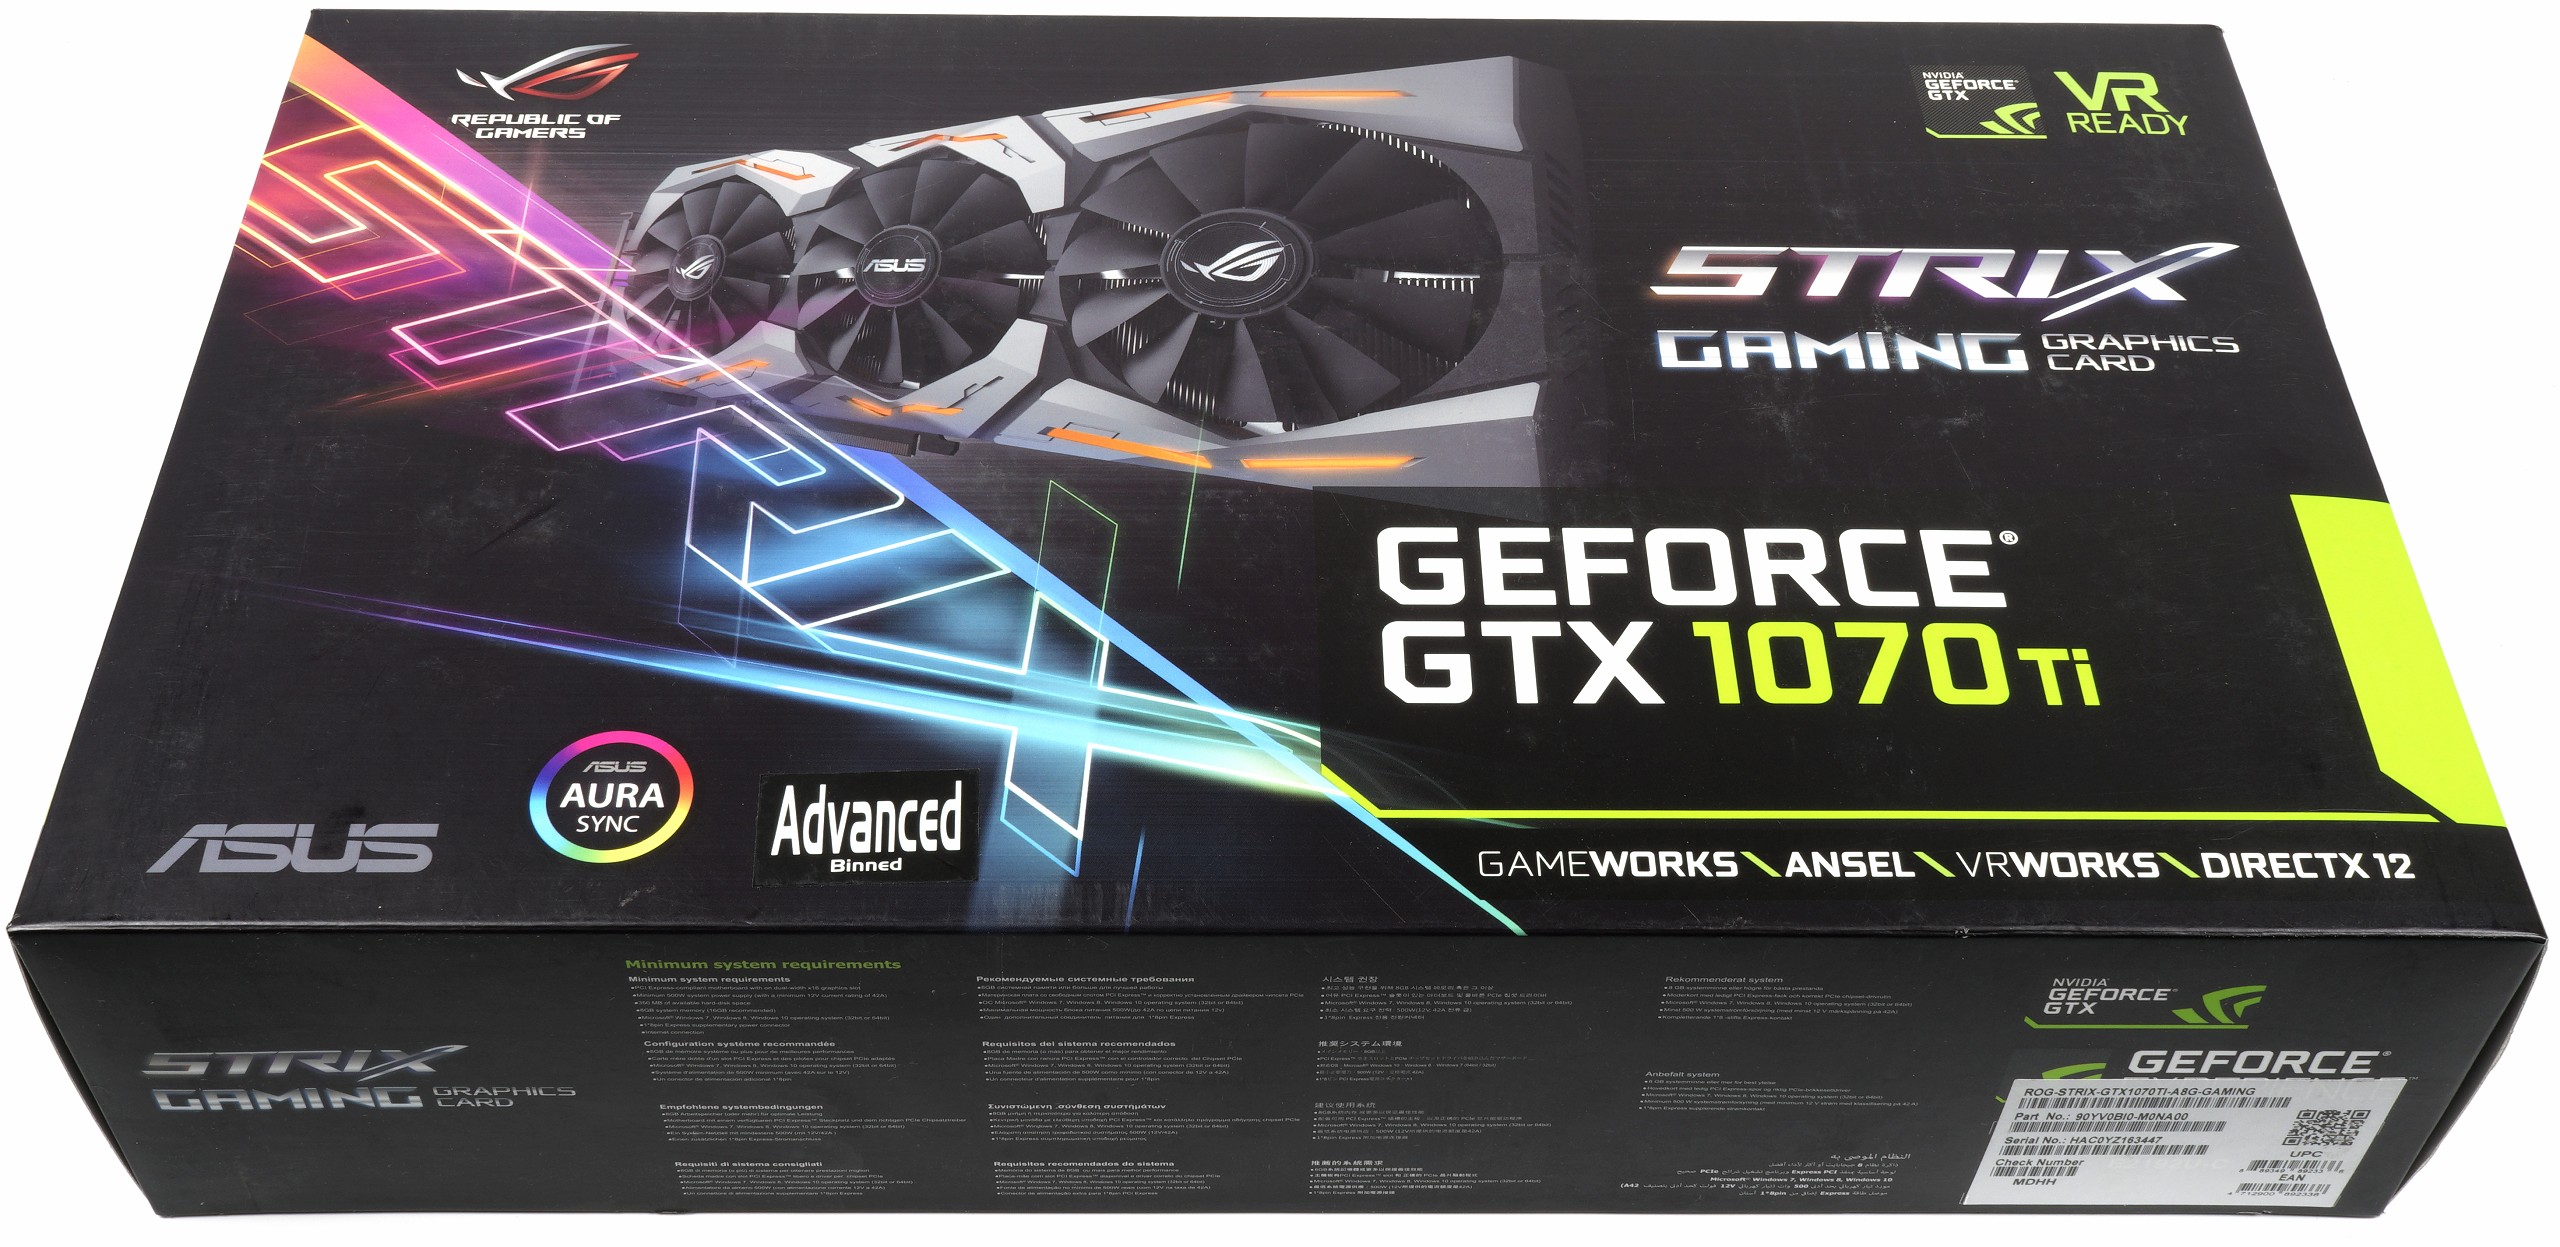 Asus ROG GeForce GTX 1070 Ti Strix Gaming 8G in review | Page 4